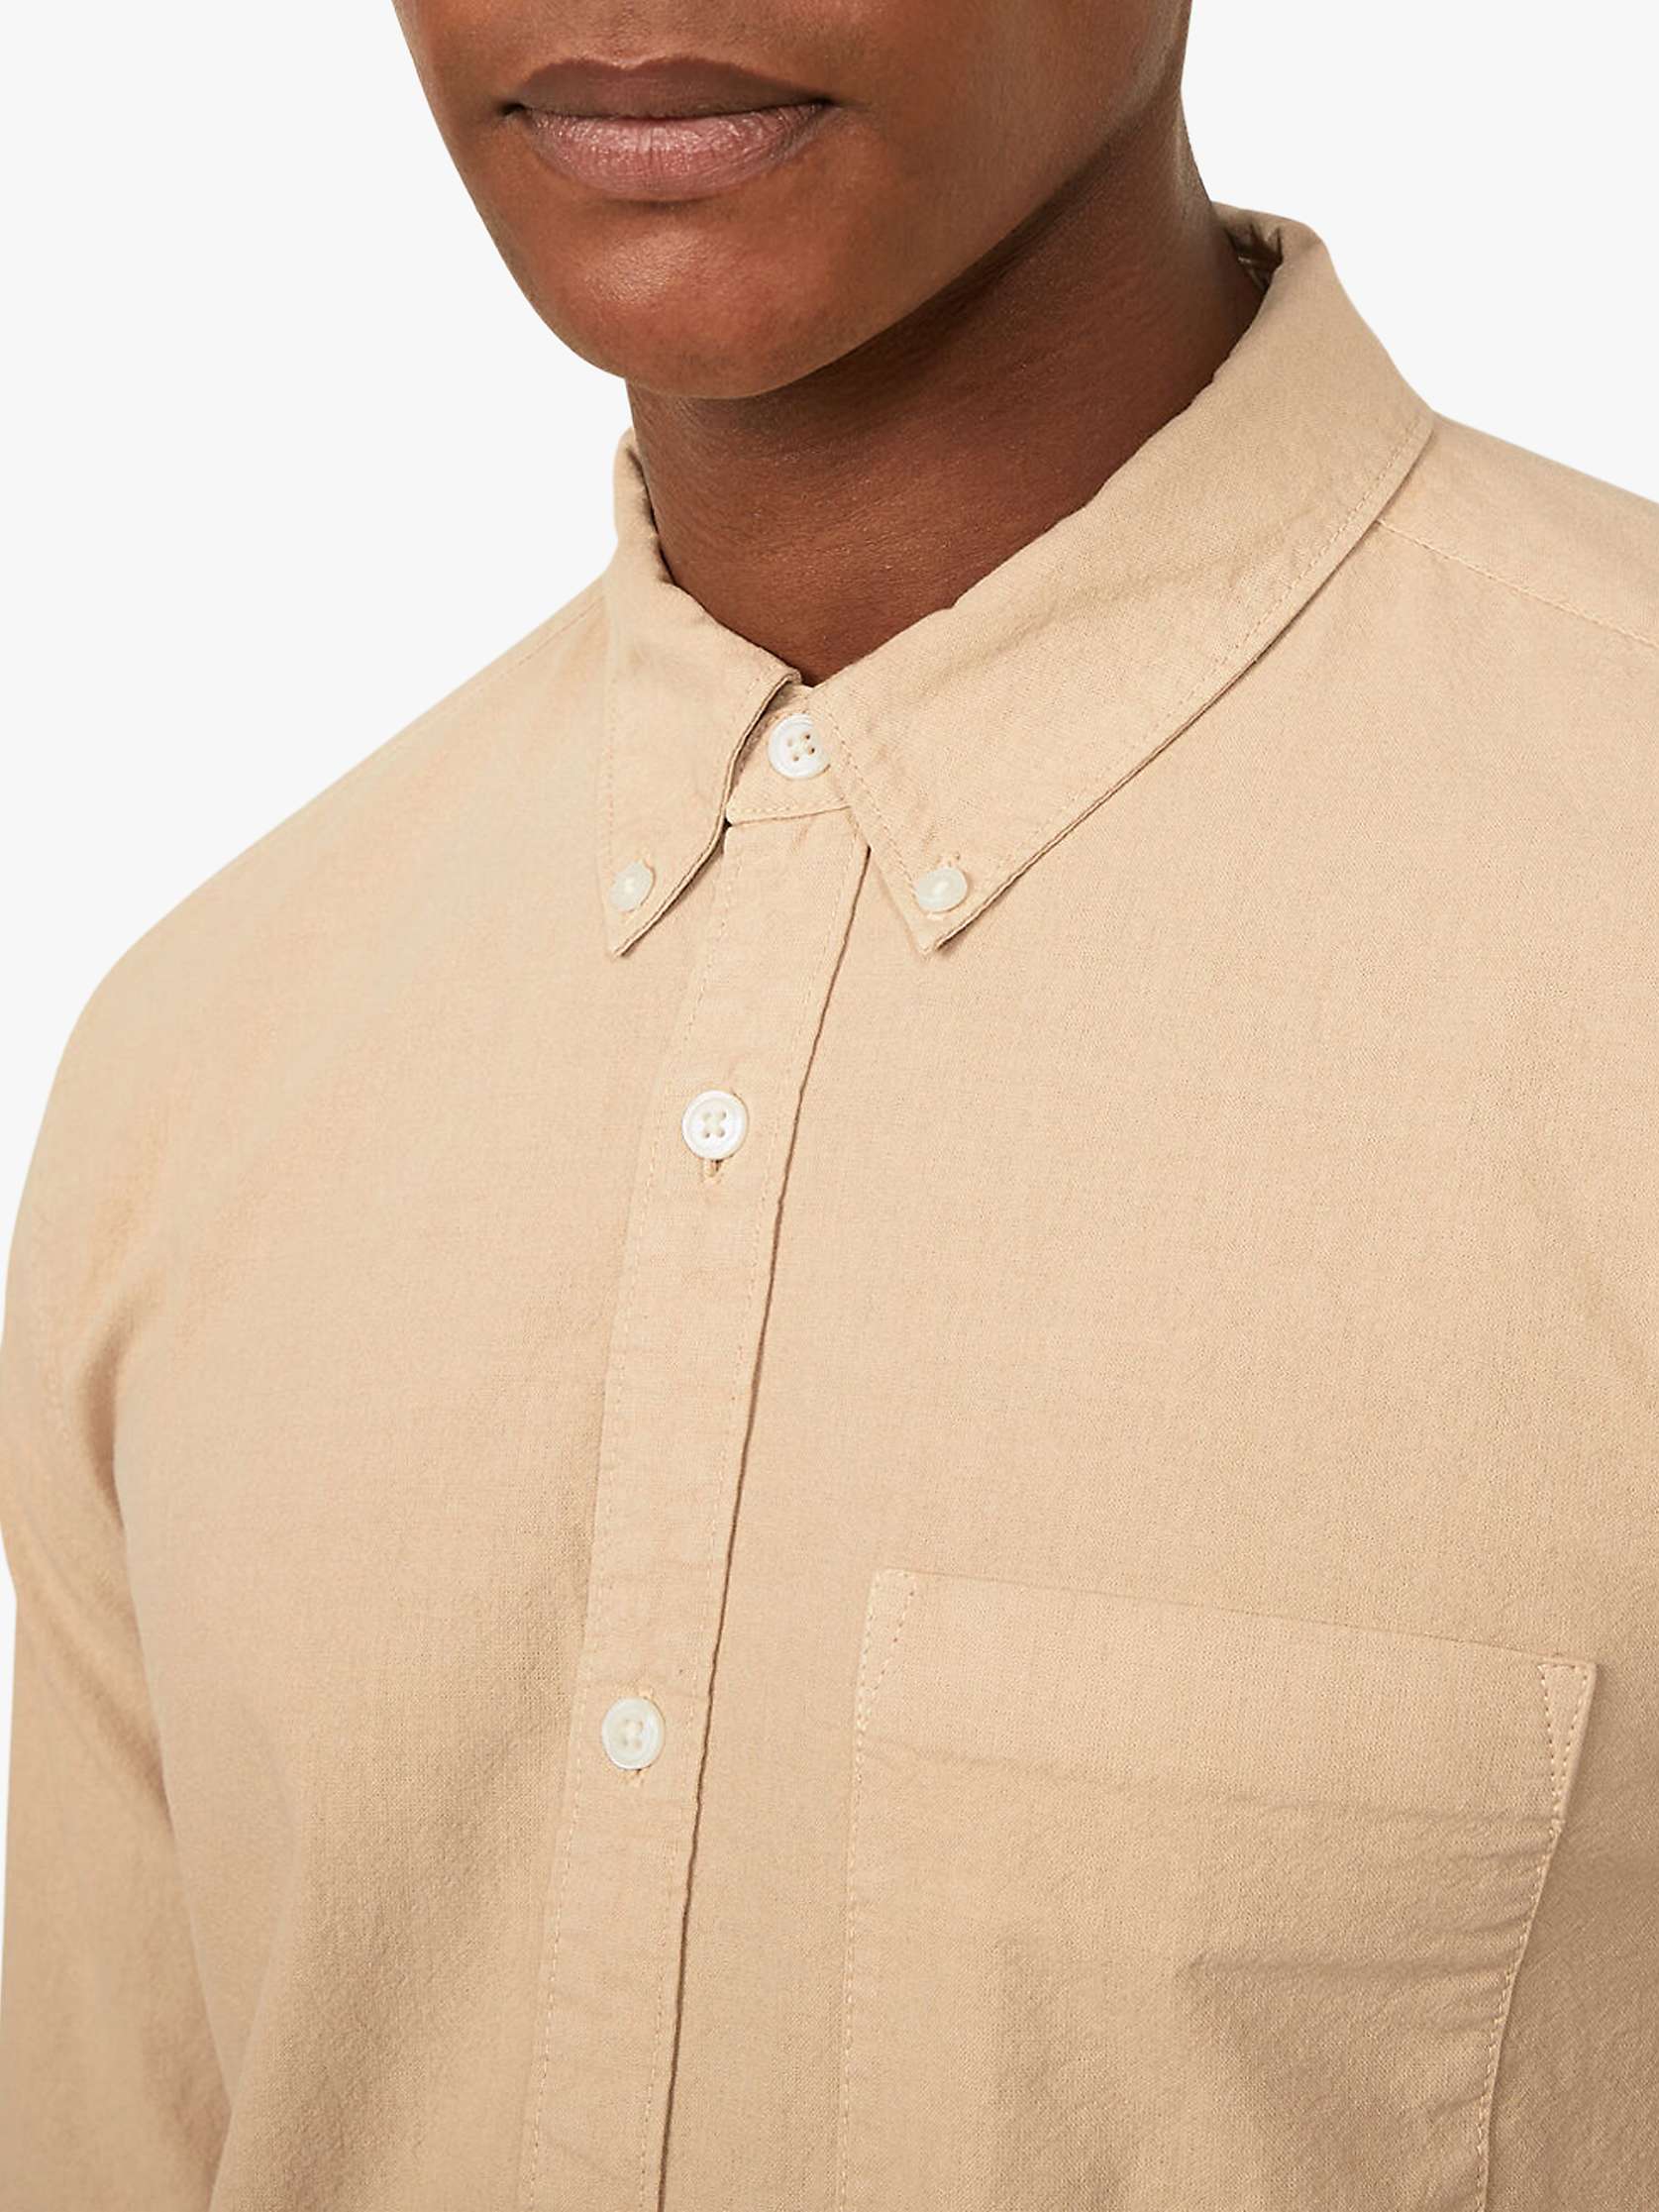 Buy Warehouse Organic Cotton Long Sleeve Textured Shirt Online at johnlewis.com